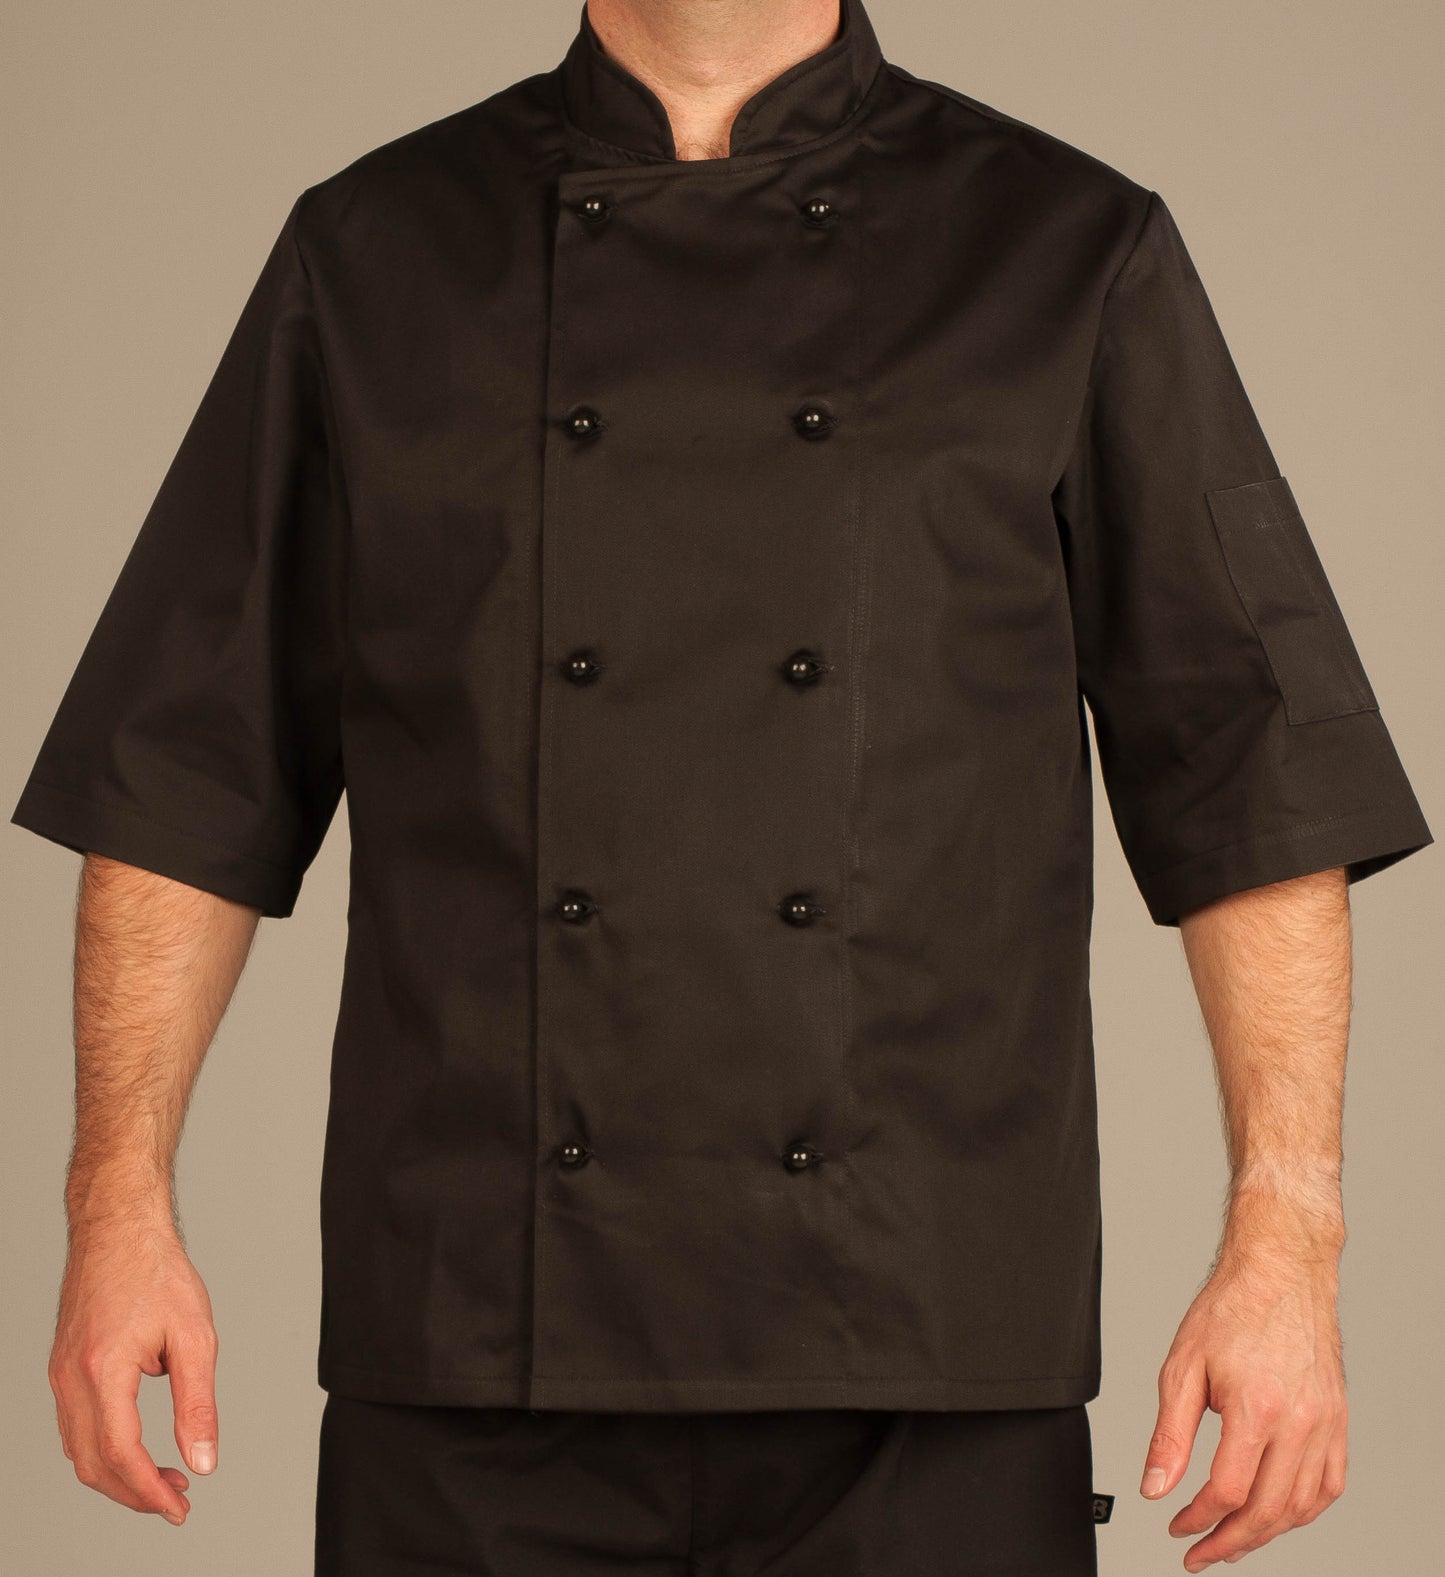 James Chef Jacket - Short Sleeves black or white